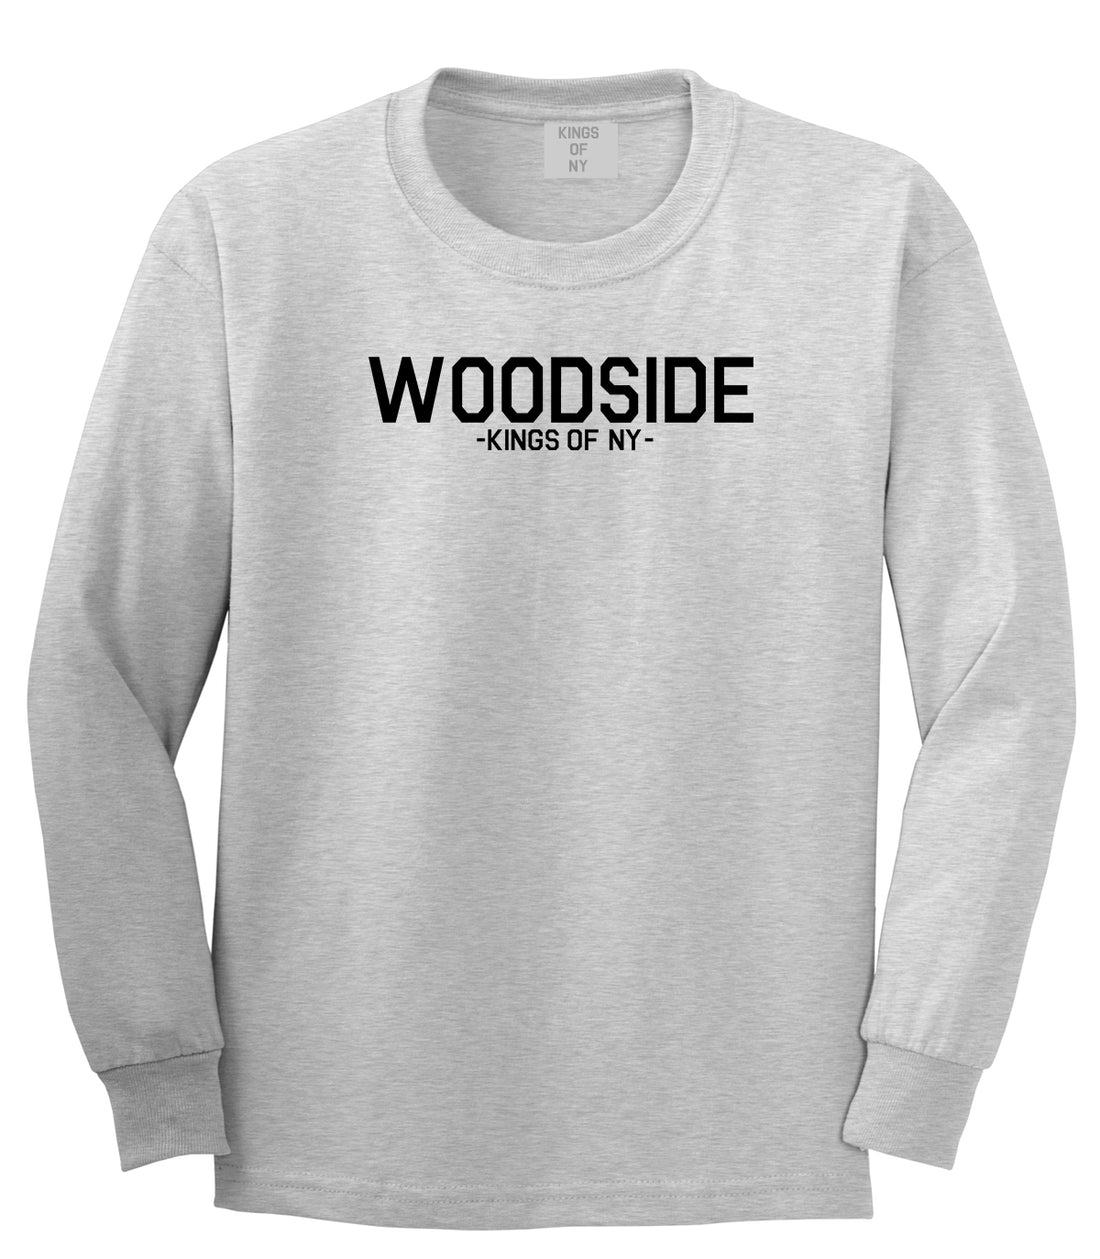 Woodside Queens New York Mens Long Sleeve T-Shirt Grey